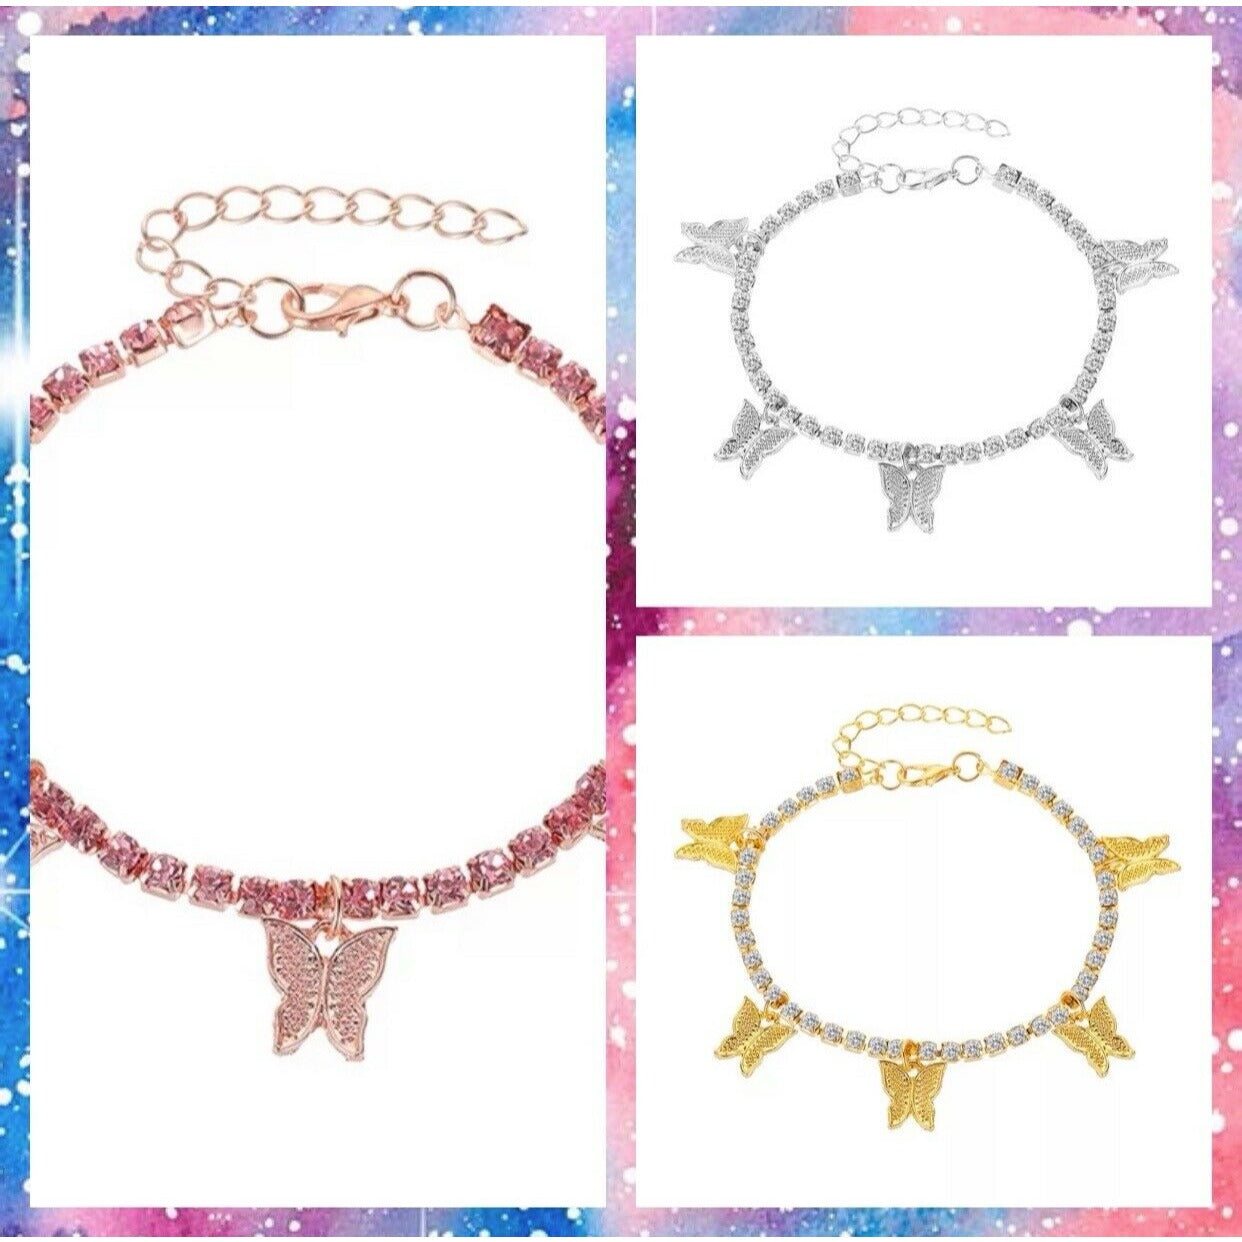 Fashion Jewelry Butterfly Designed Bling Rhinestone Anklets/Bracelet - Variety Sales Etc.